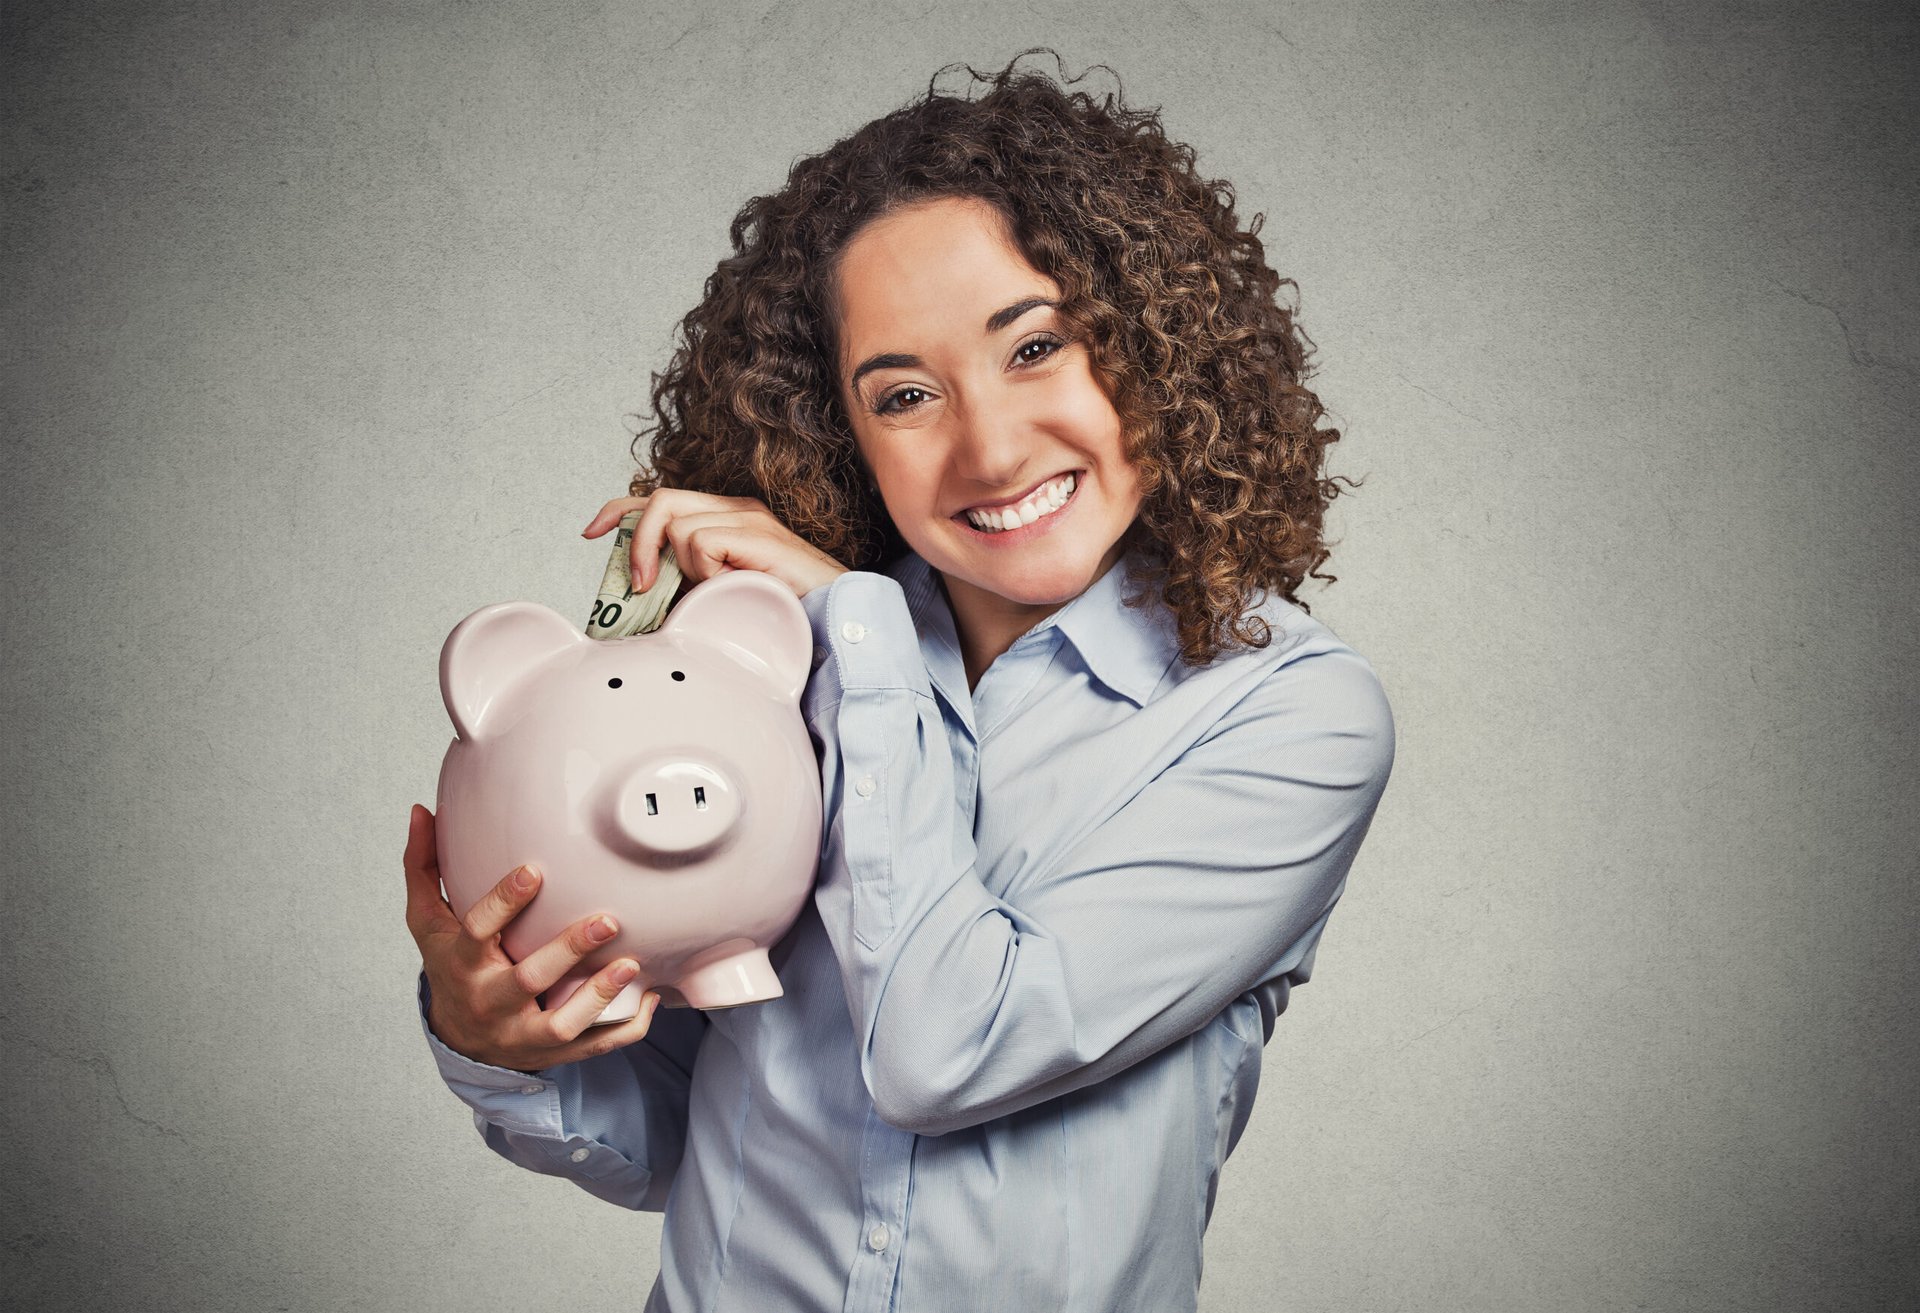 Woman putting money into piggy bank